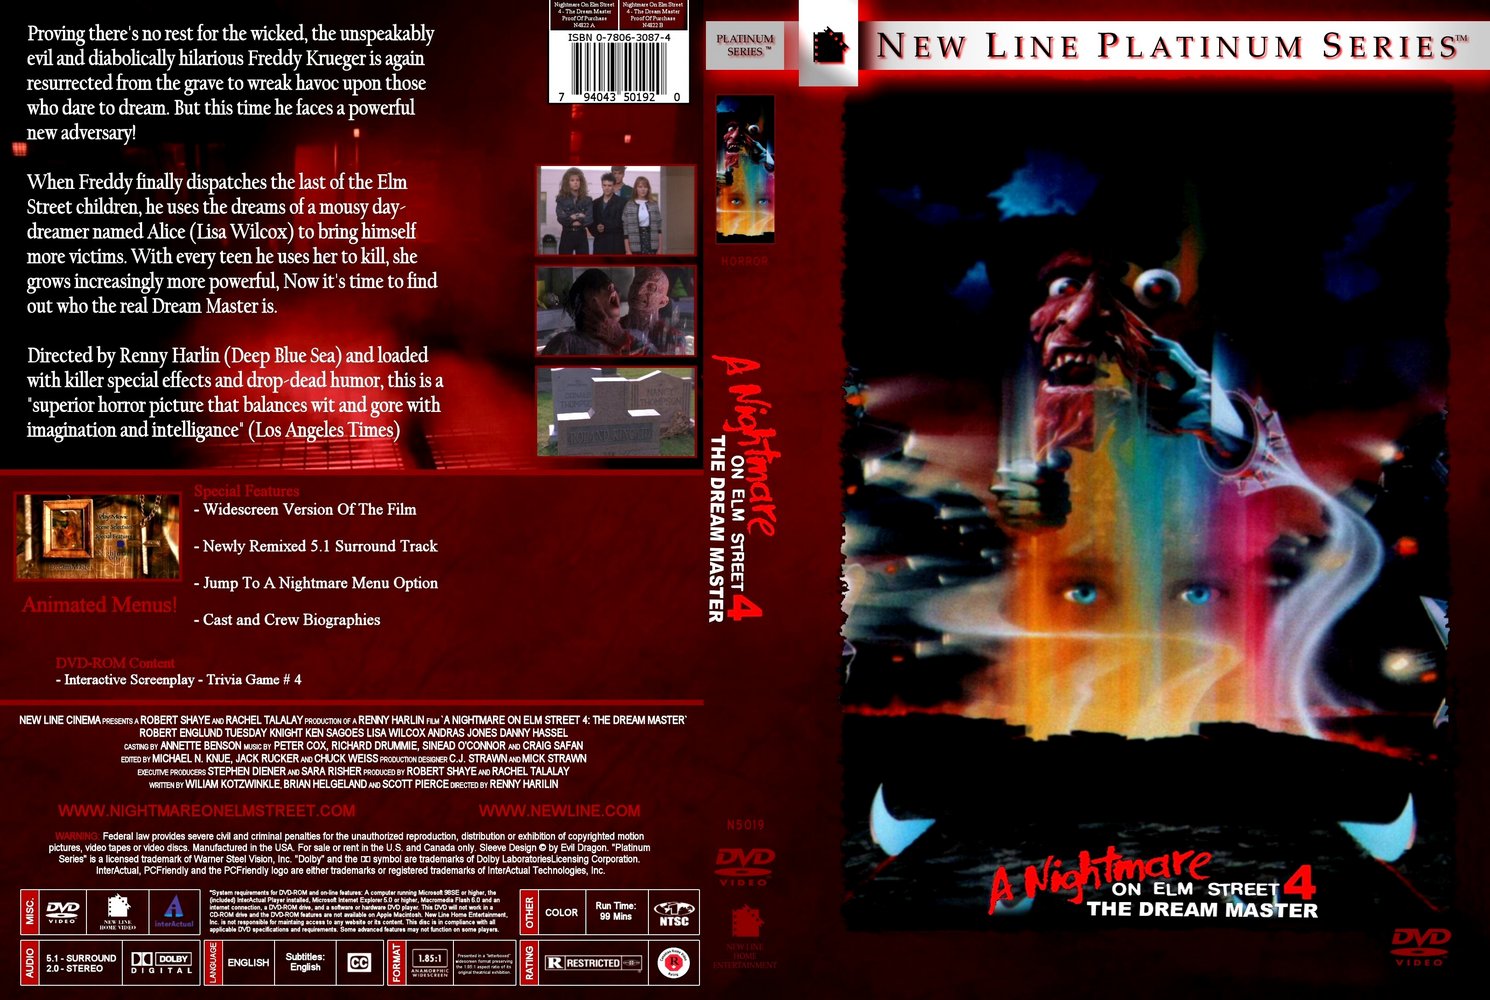 4.A Nightmare on Elm Street  The Dream Master HD 1988 - A Nightmare on Elm Street 4 The Dream Master 1988.jpg